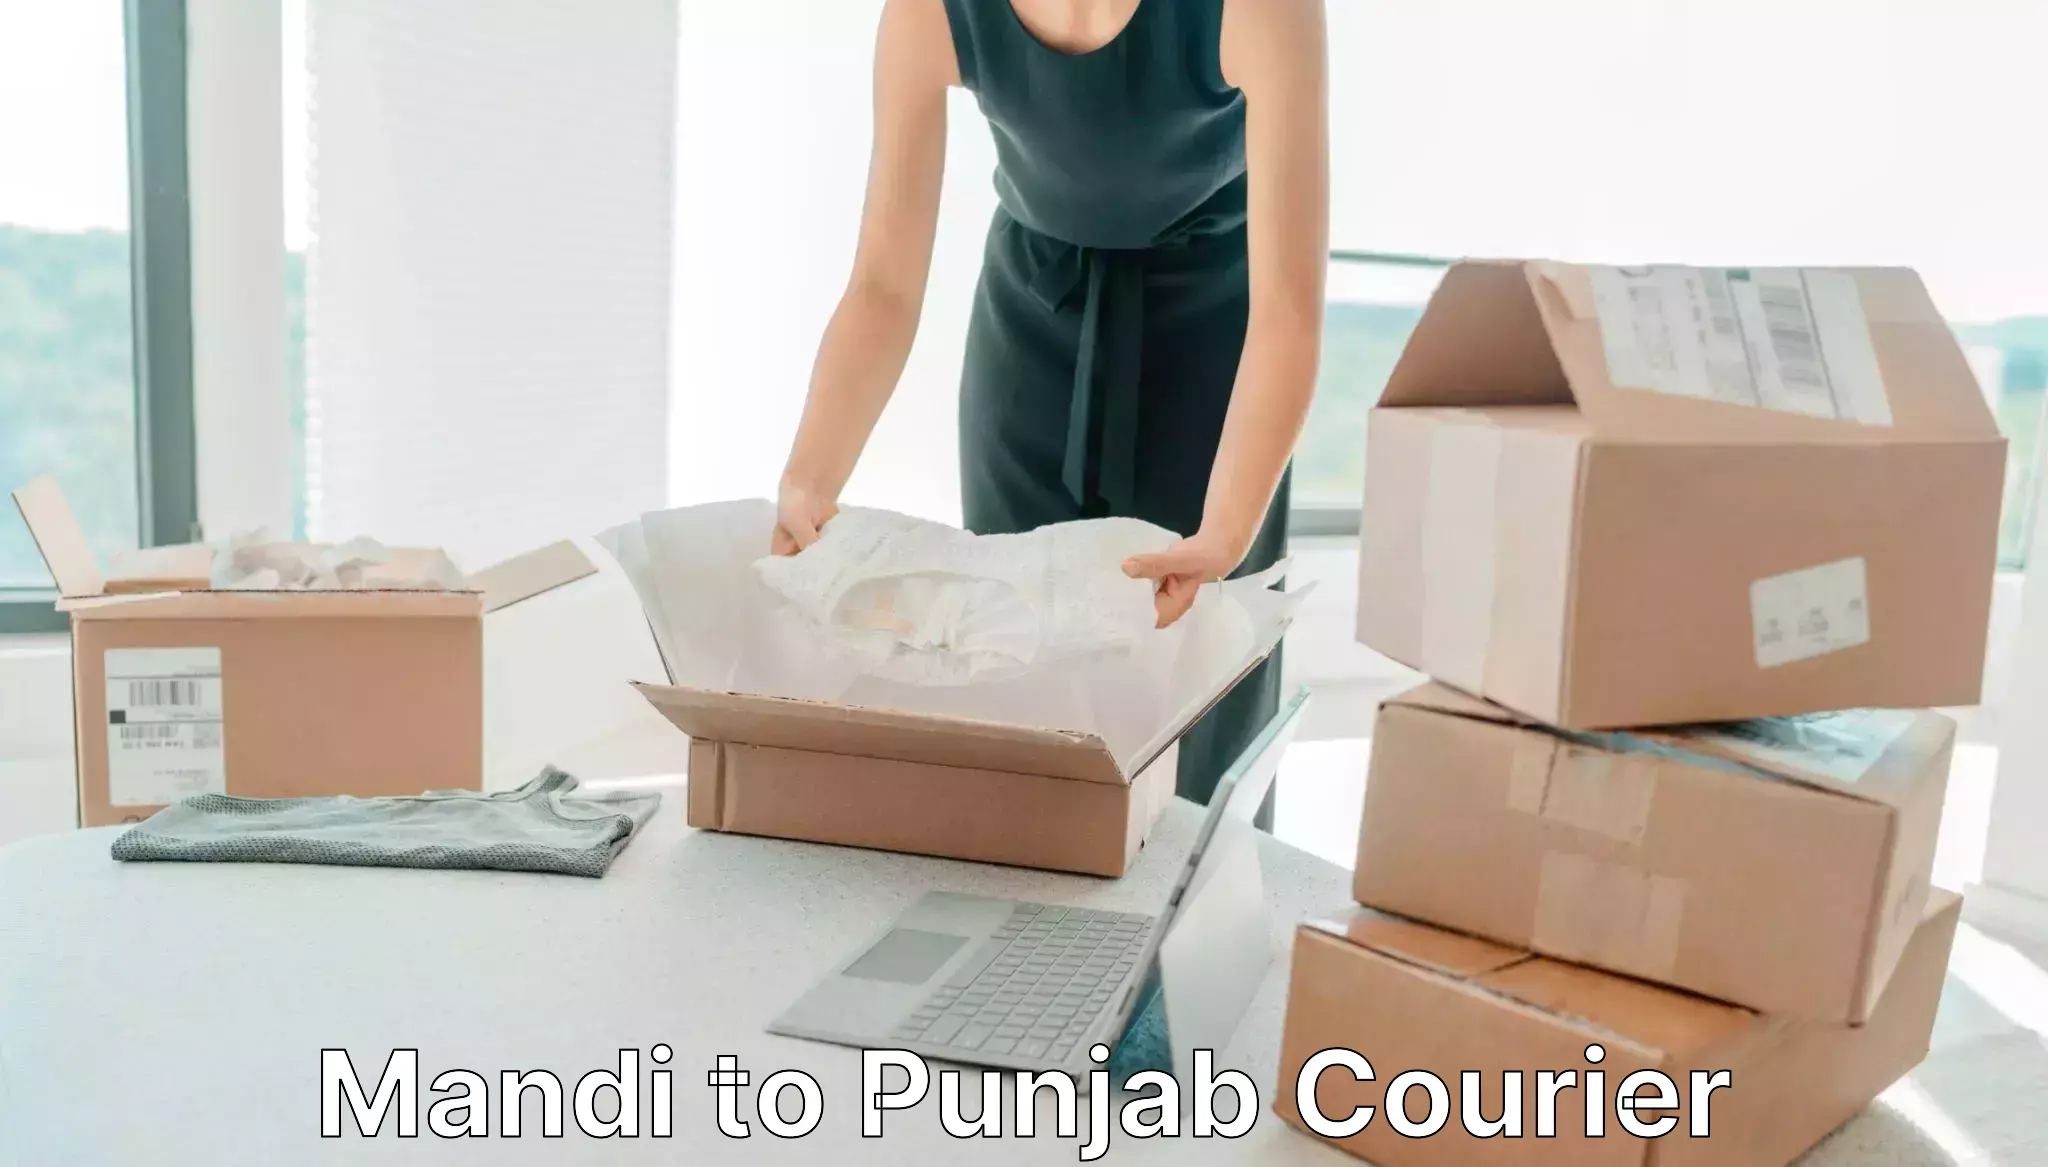 Logistics service provider Mandi to Punjab